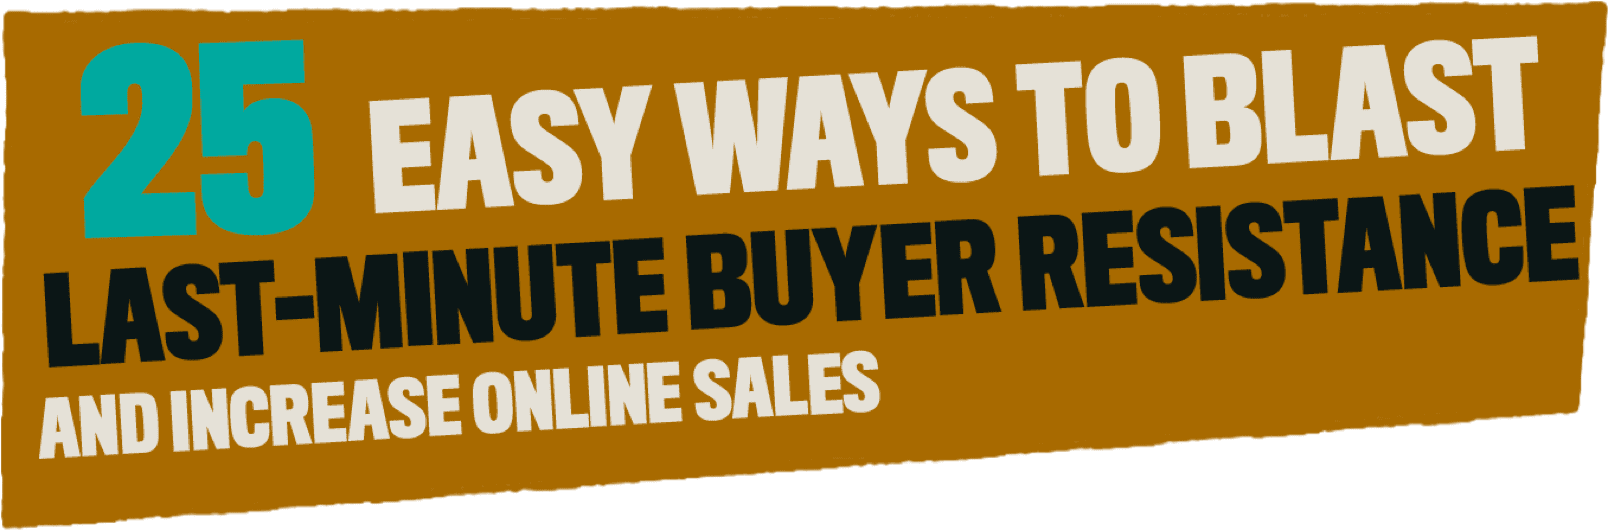 25 easy ways to blast last-minute buyer resistance and increase online sales